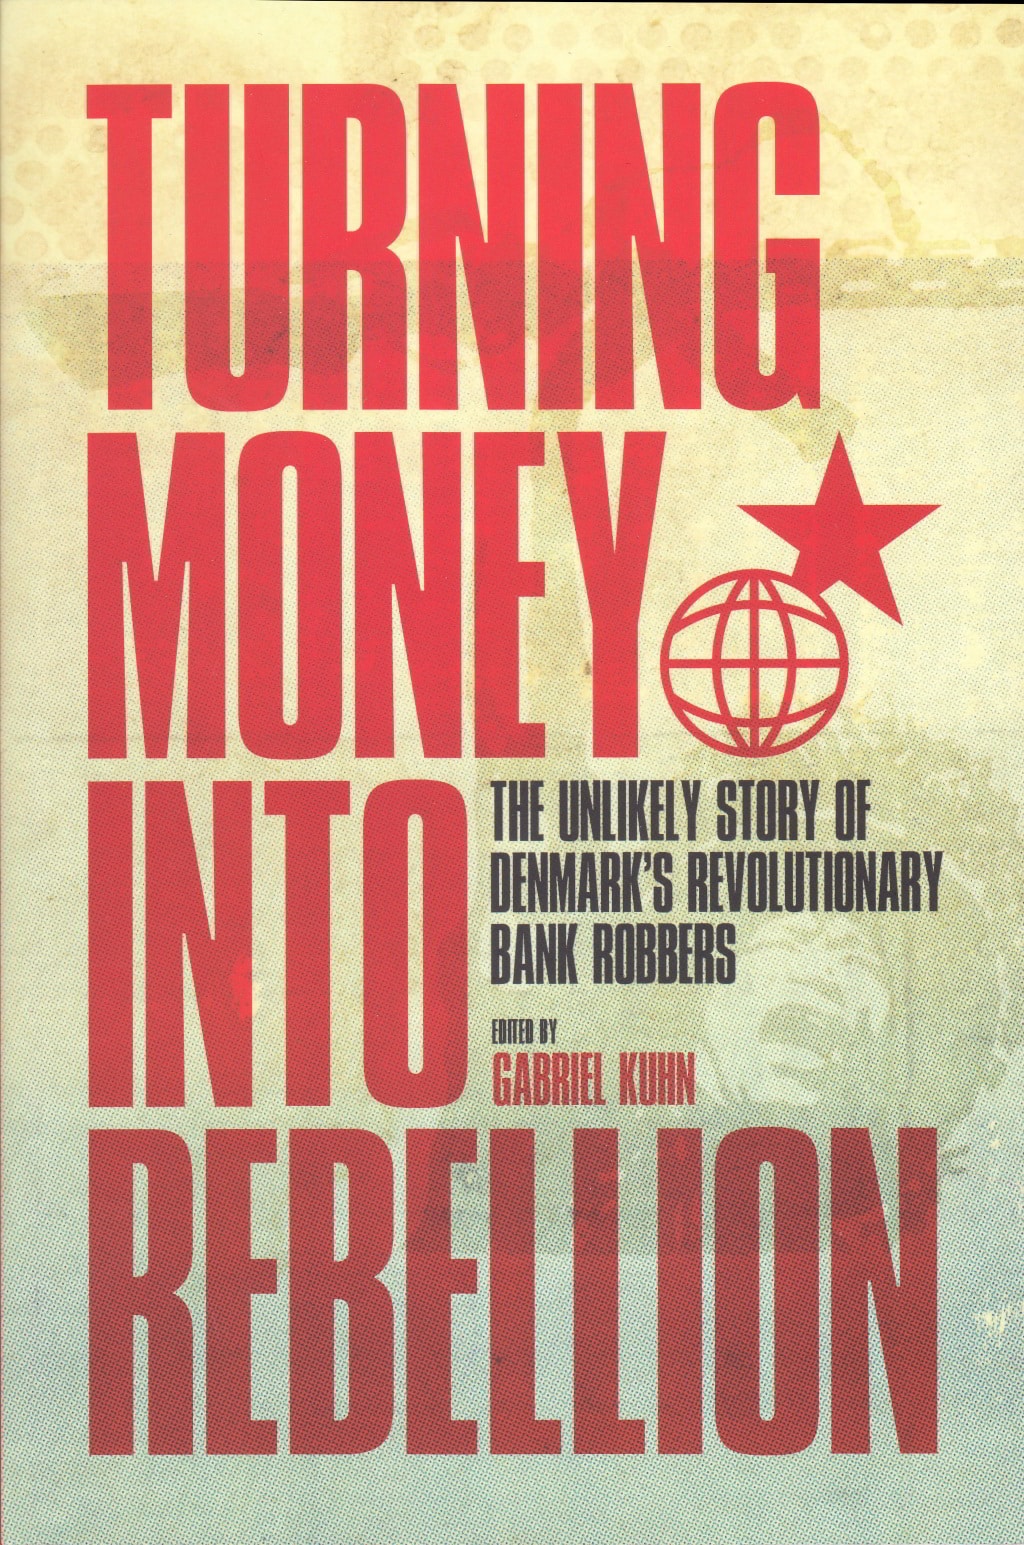 Turning Money into Rebellion editet by Gabriel Kuhn